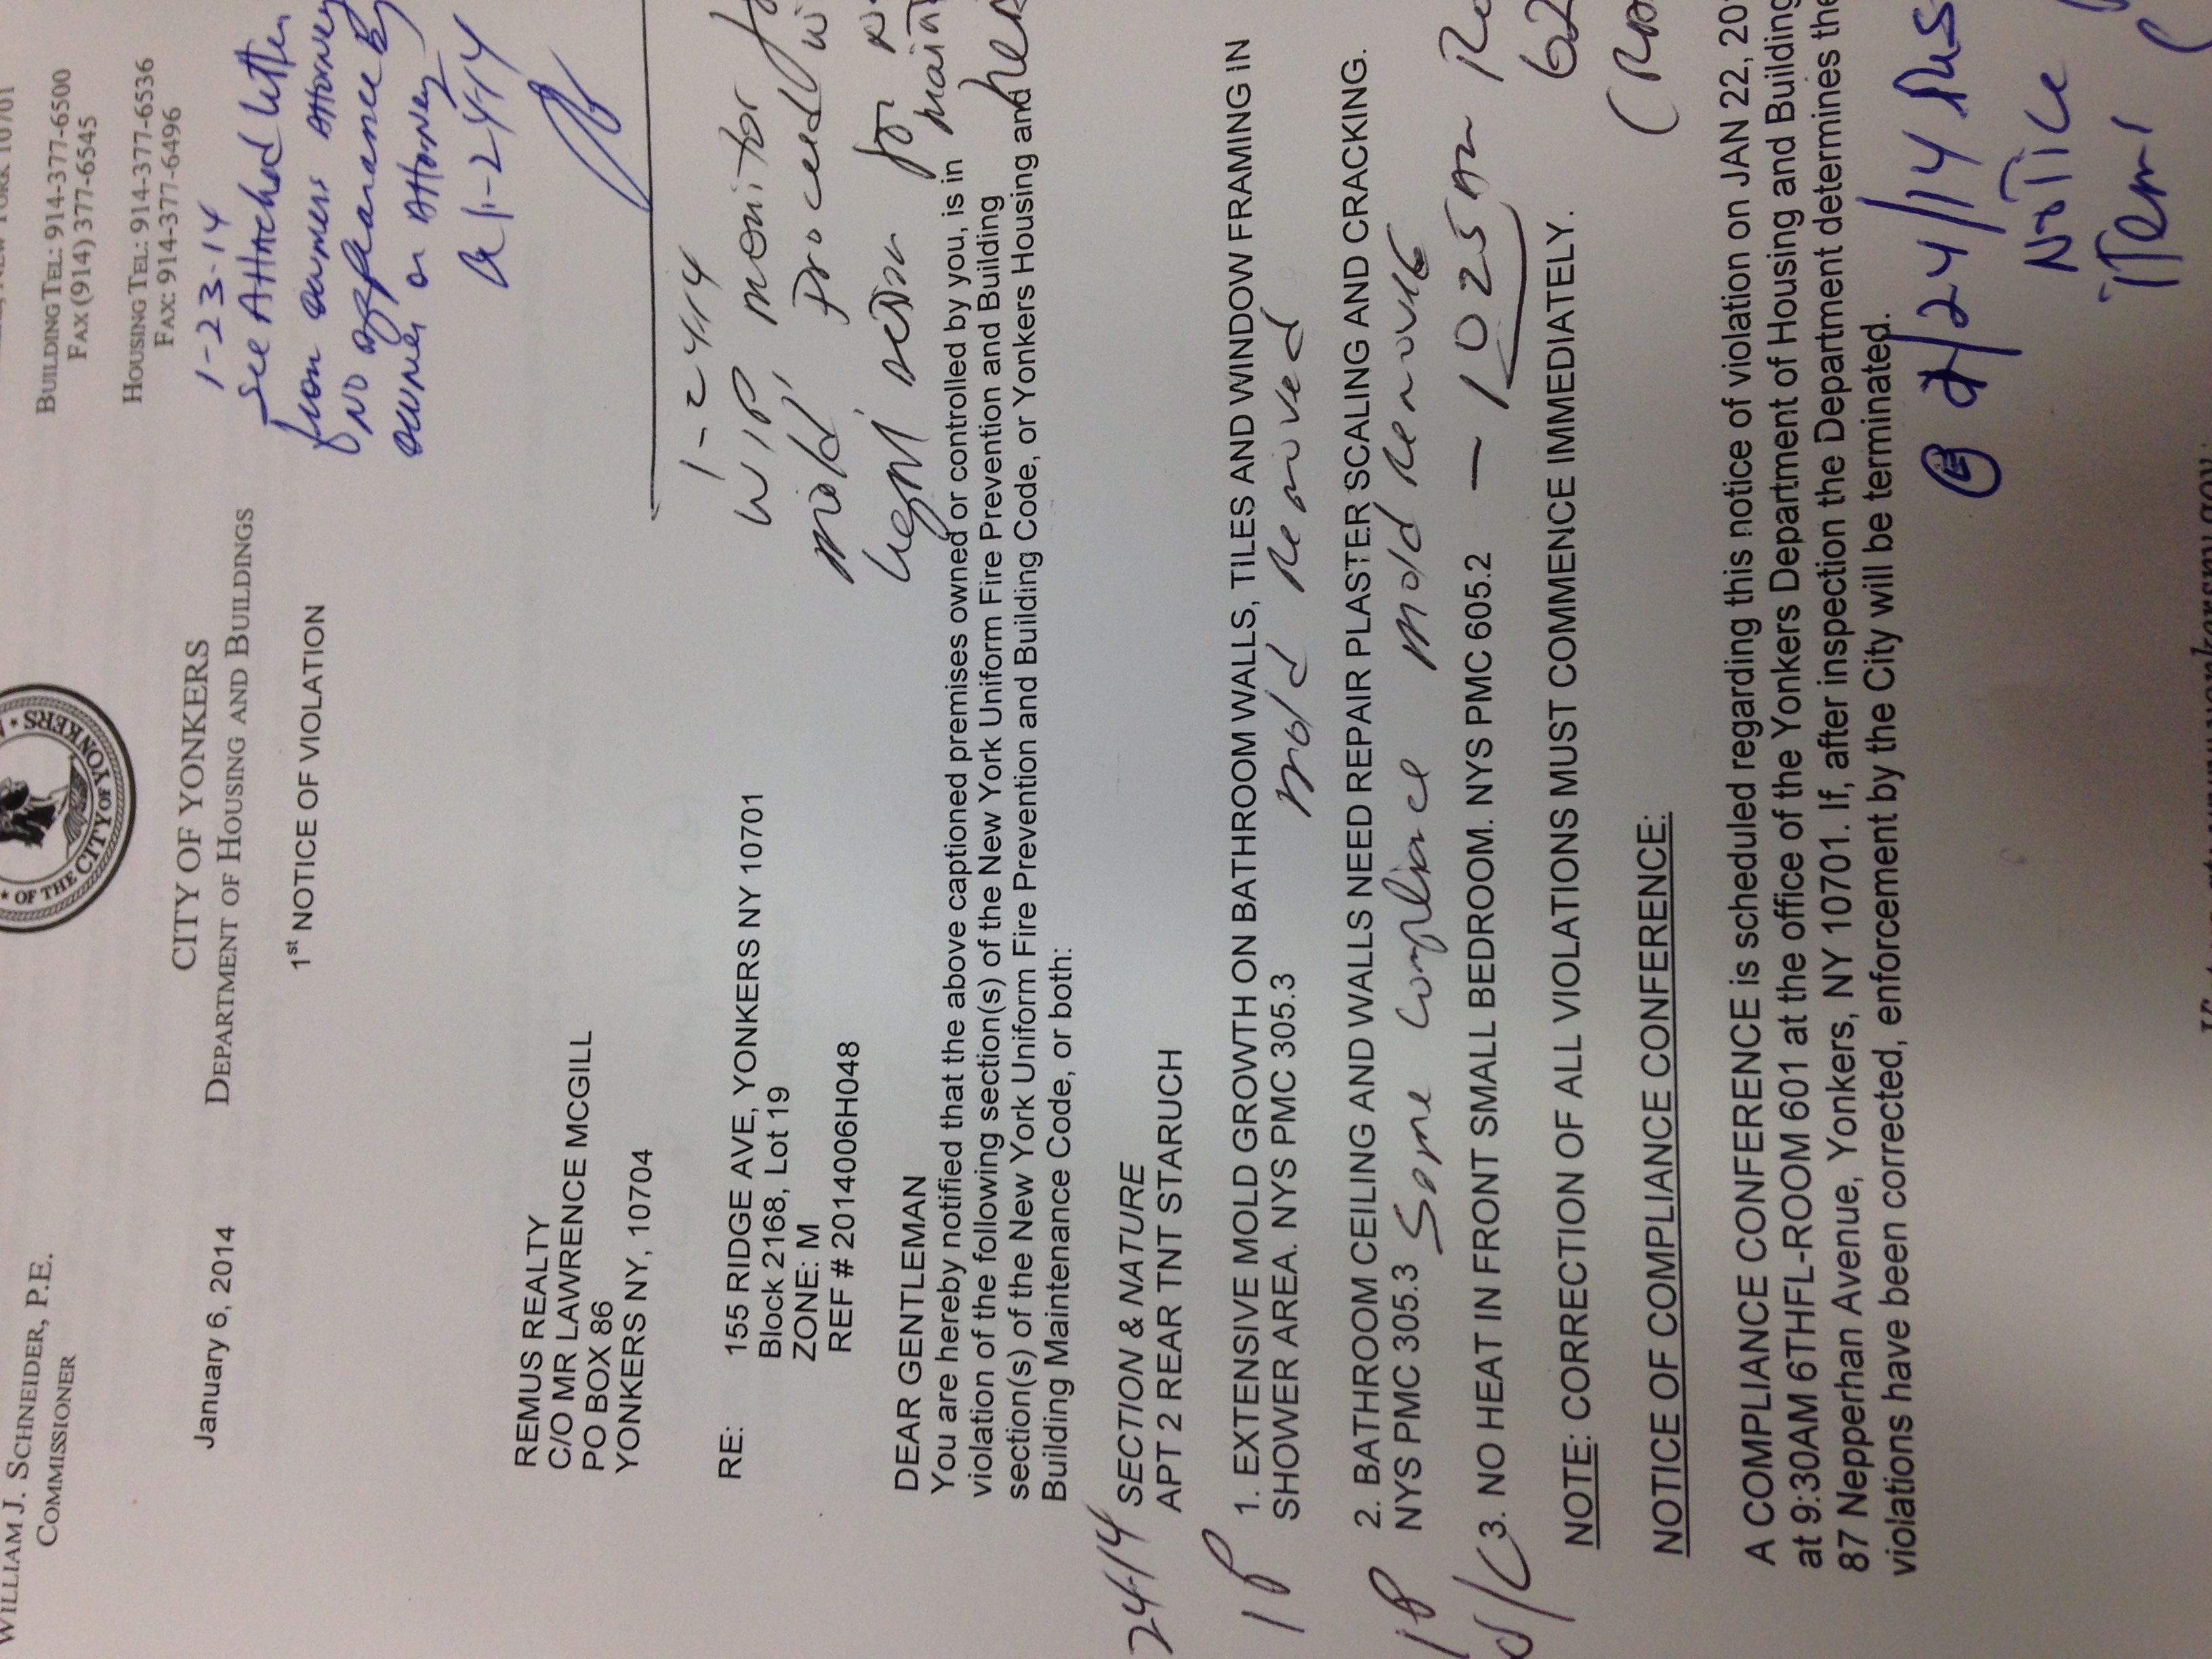 A copy of a Yonkers building department complaint obtained through a FOIL request. 